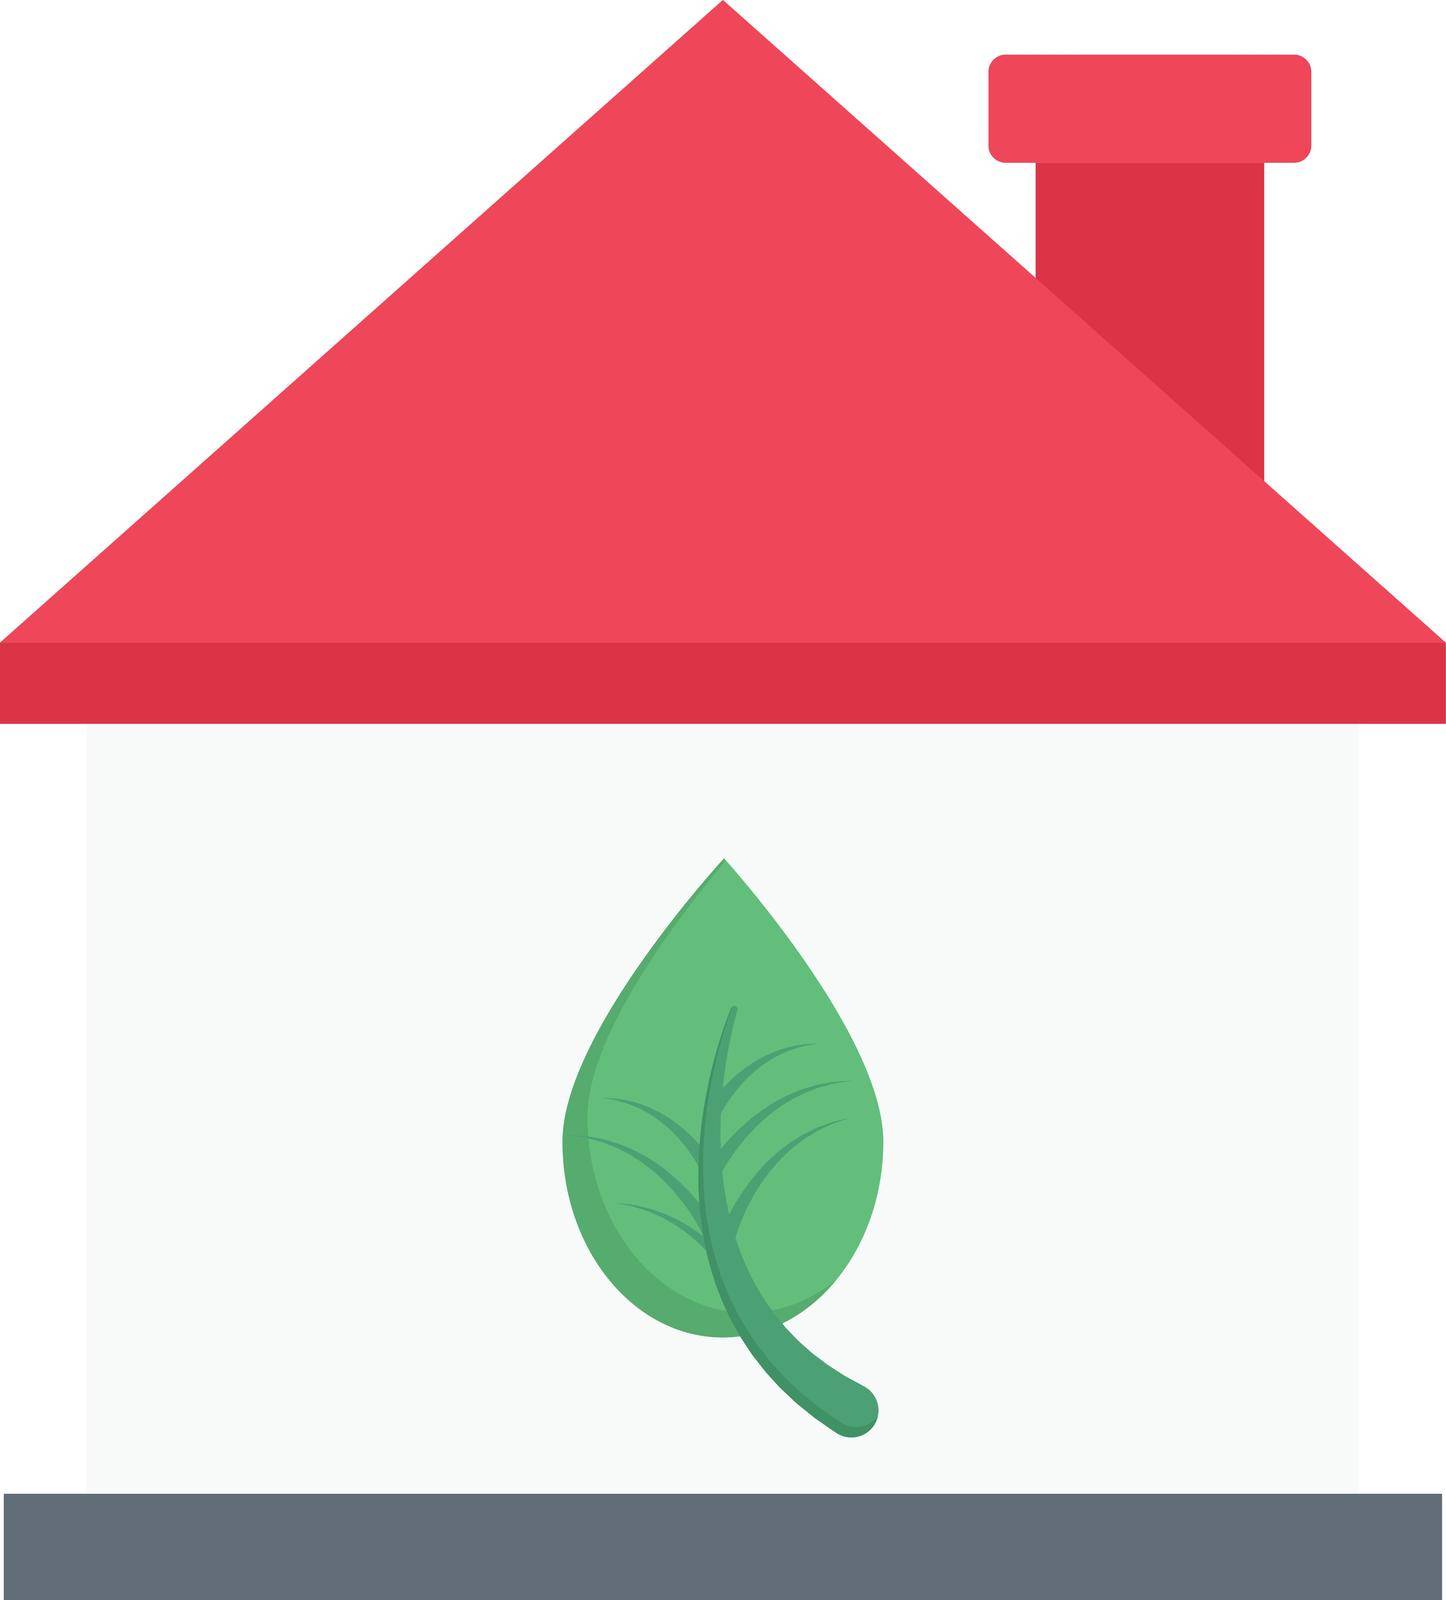 green house vector flat colour icon